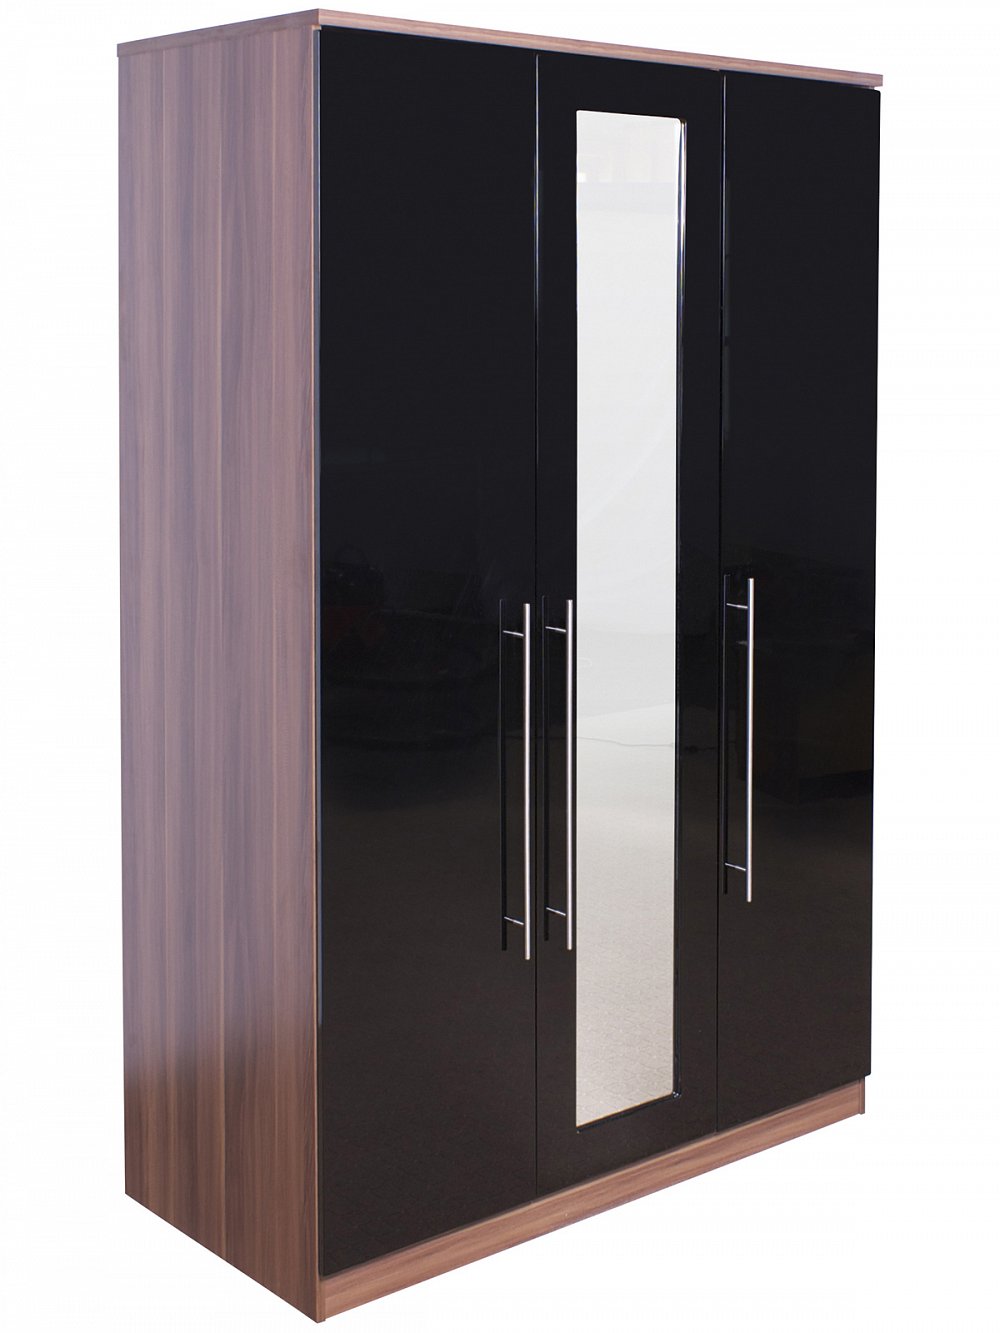 GFW Furniture Modular 3 Door + Mirror Wardrobe